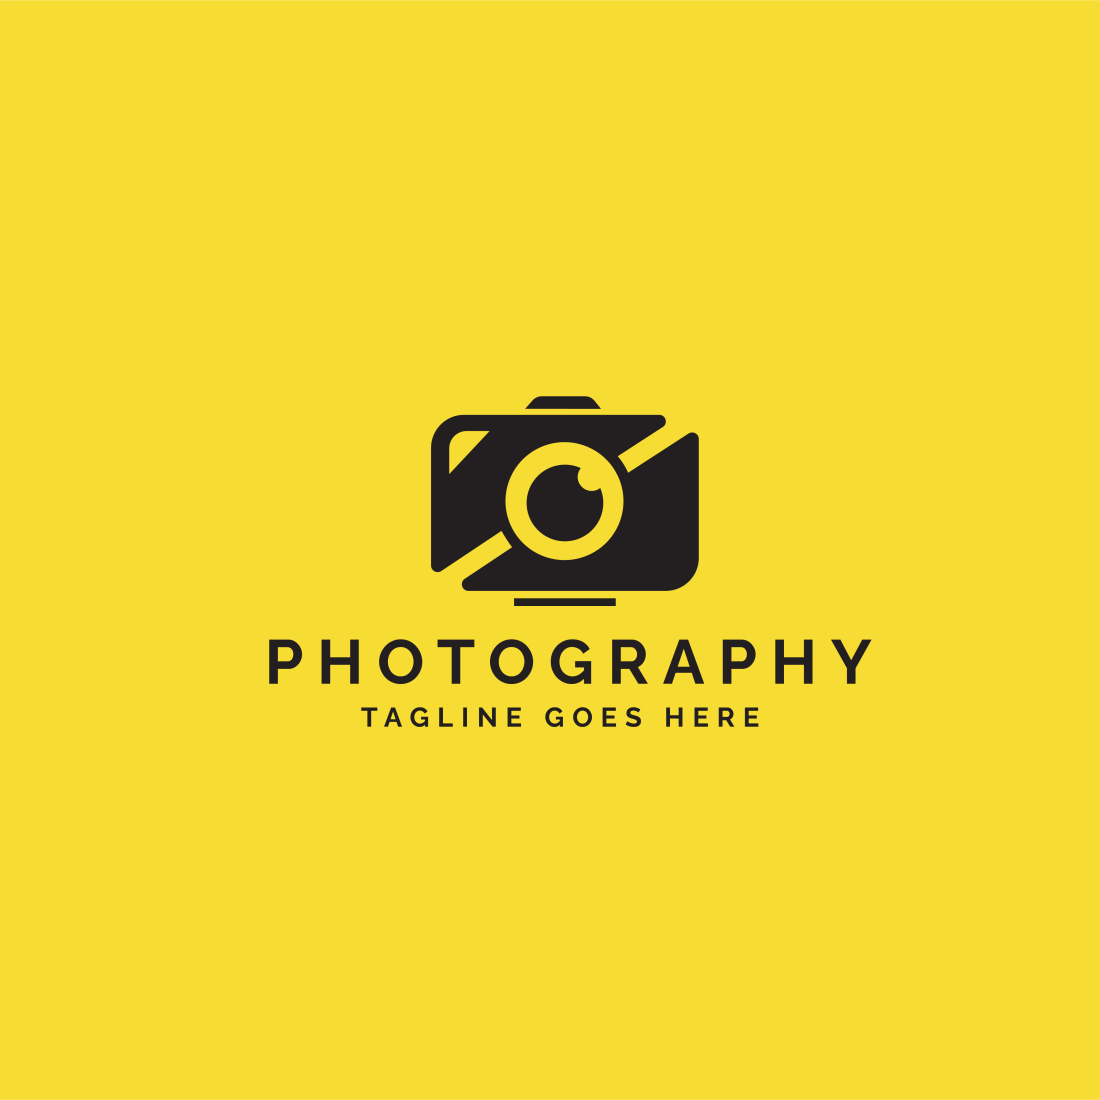 Creative Photography Logo preview image.